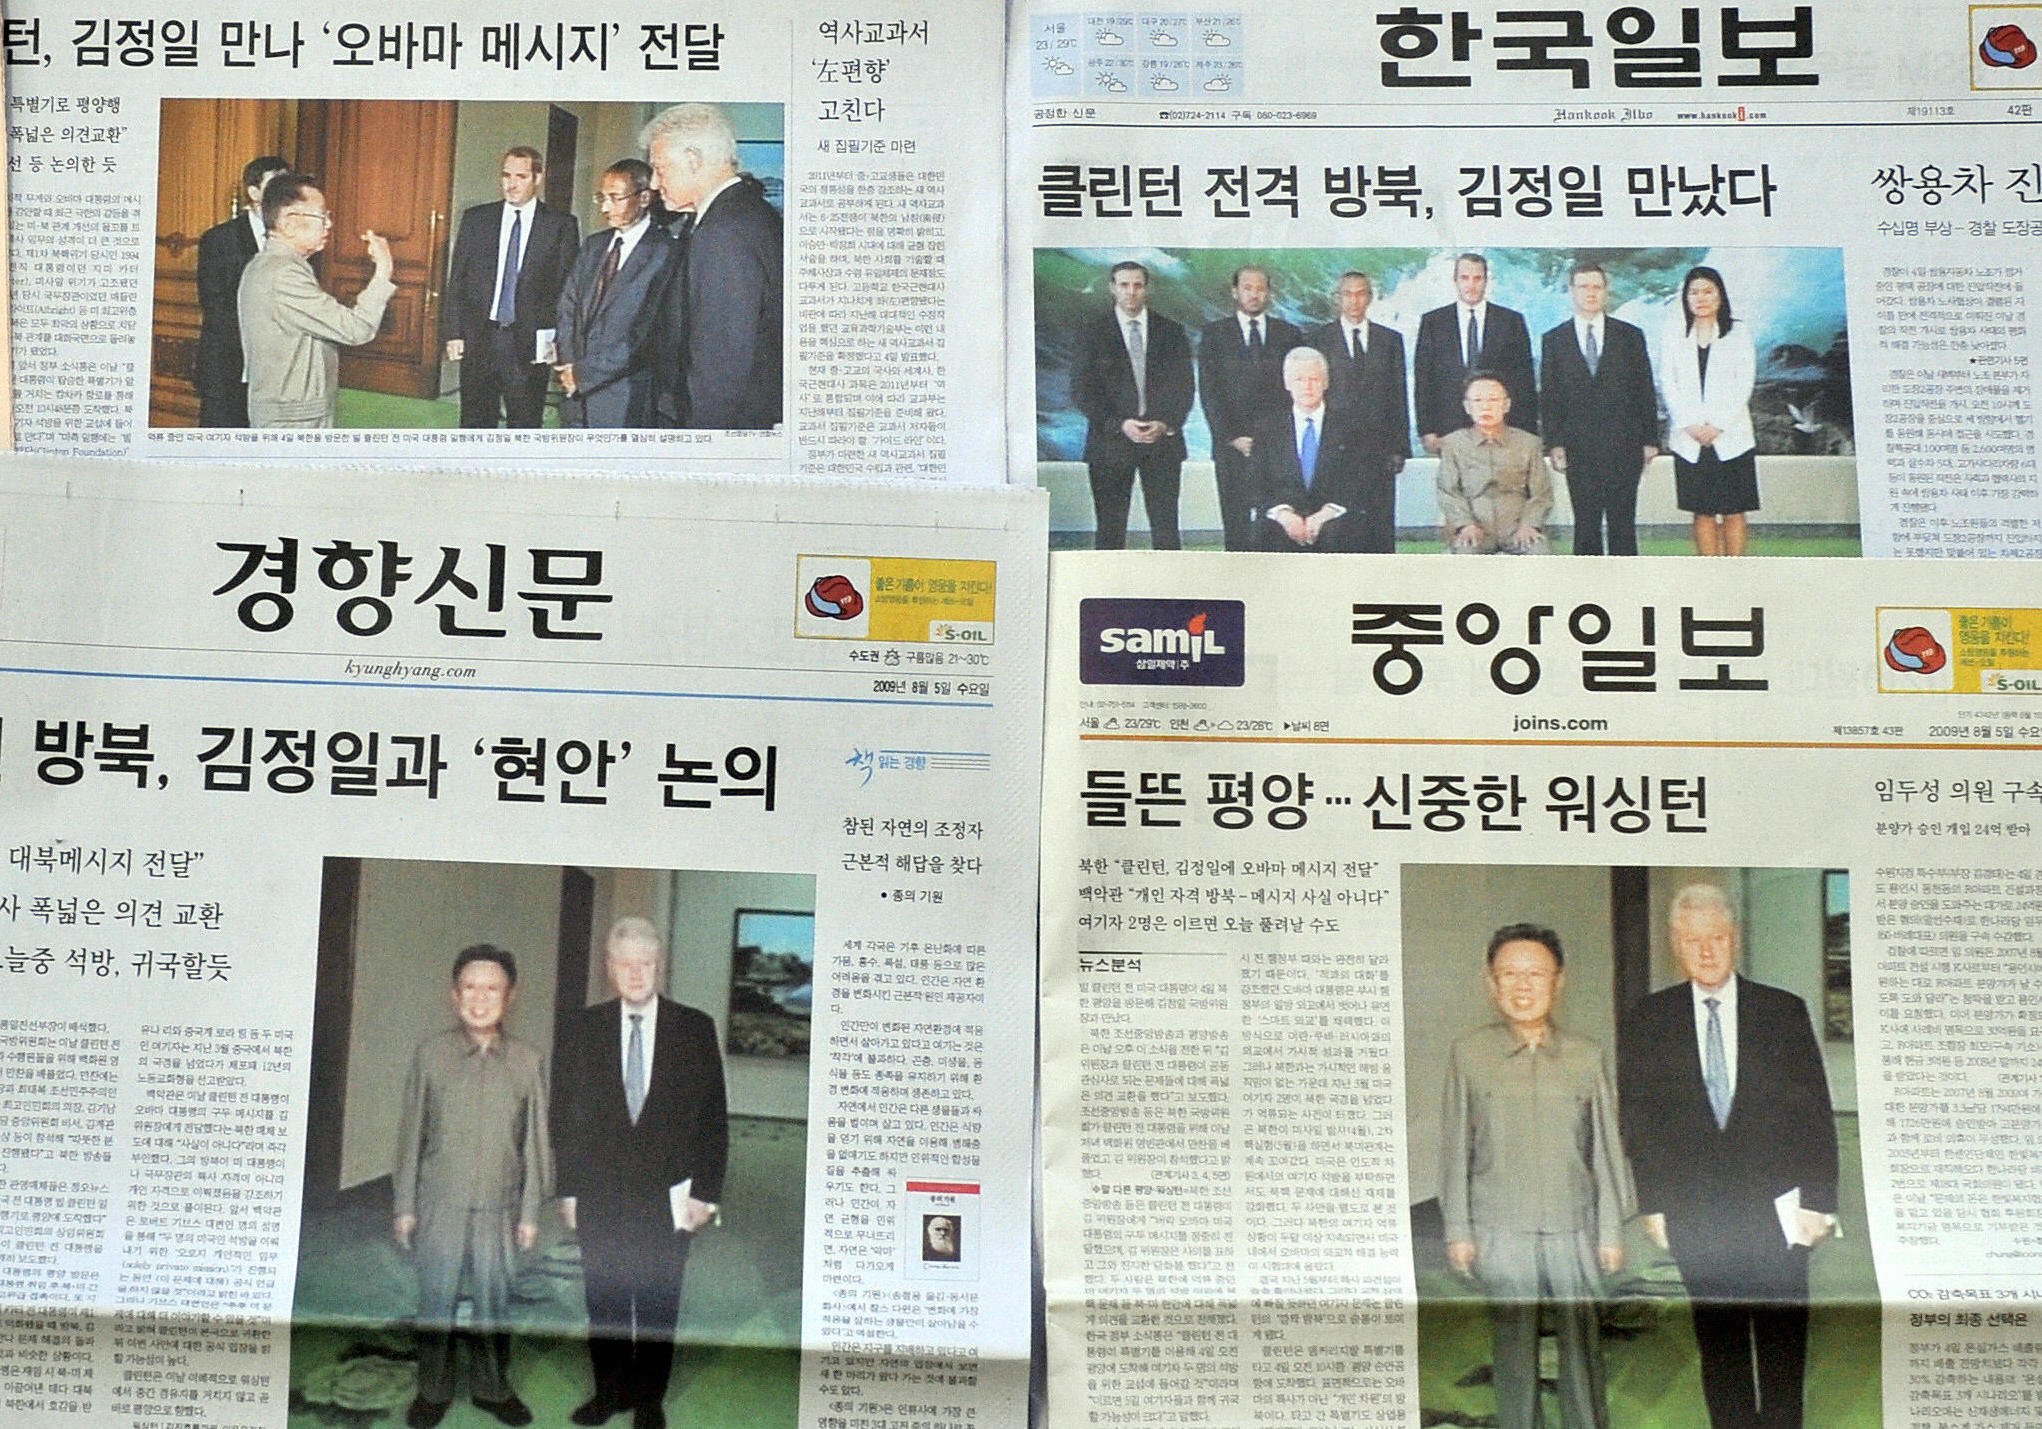 US president Bill Clinton's visit to North Korea meets Kim Jong-Il 